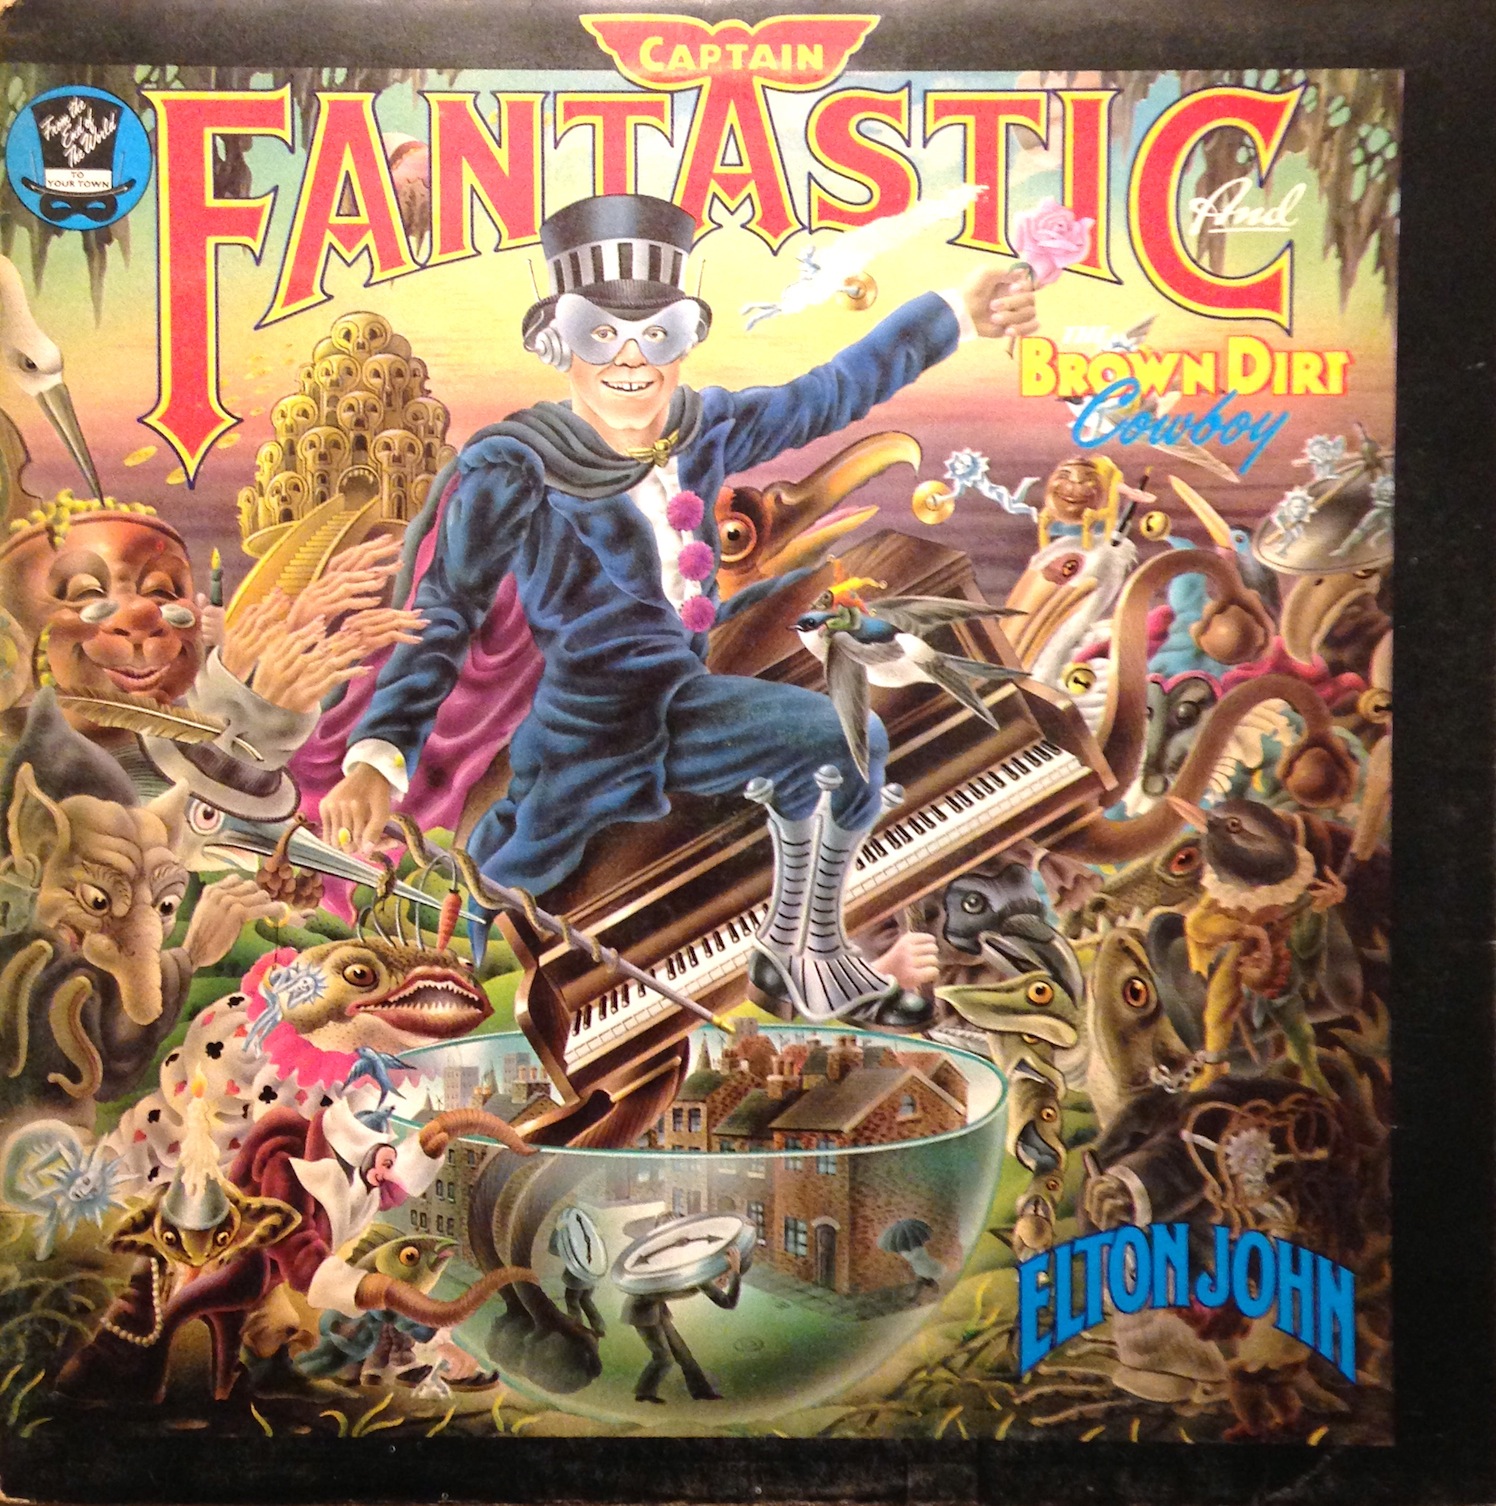 Elton John - Captain Fantastic And The Brown Dirt Cowboy (DJM Records, 1975)